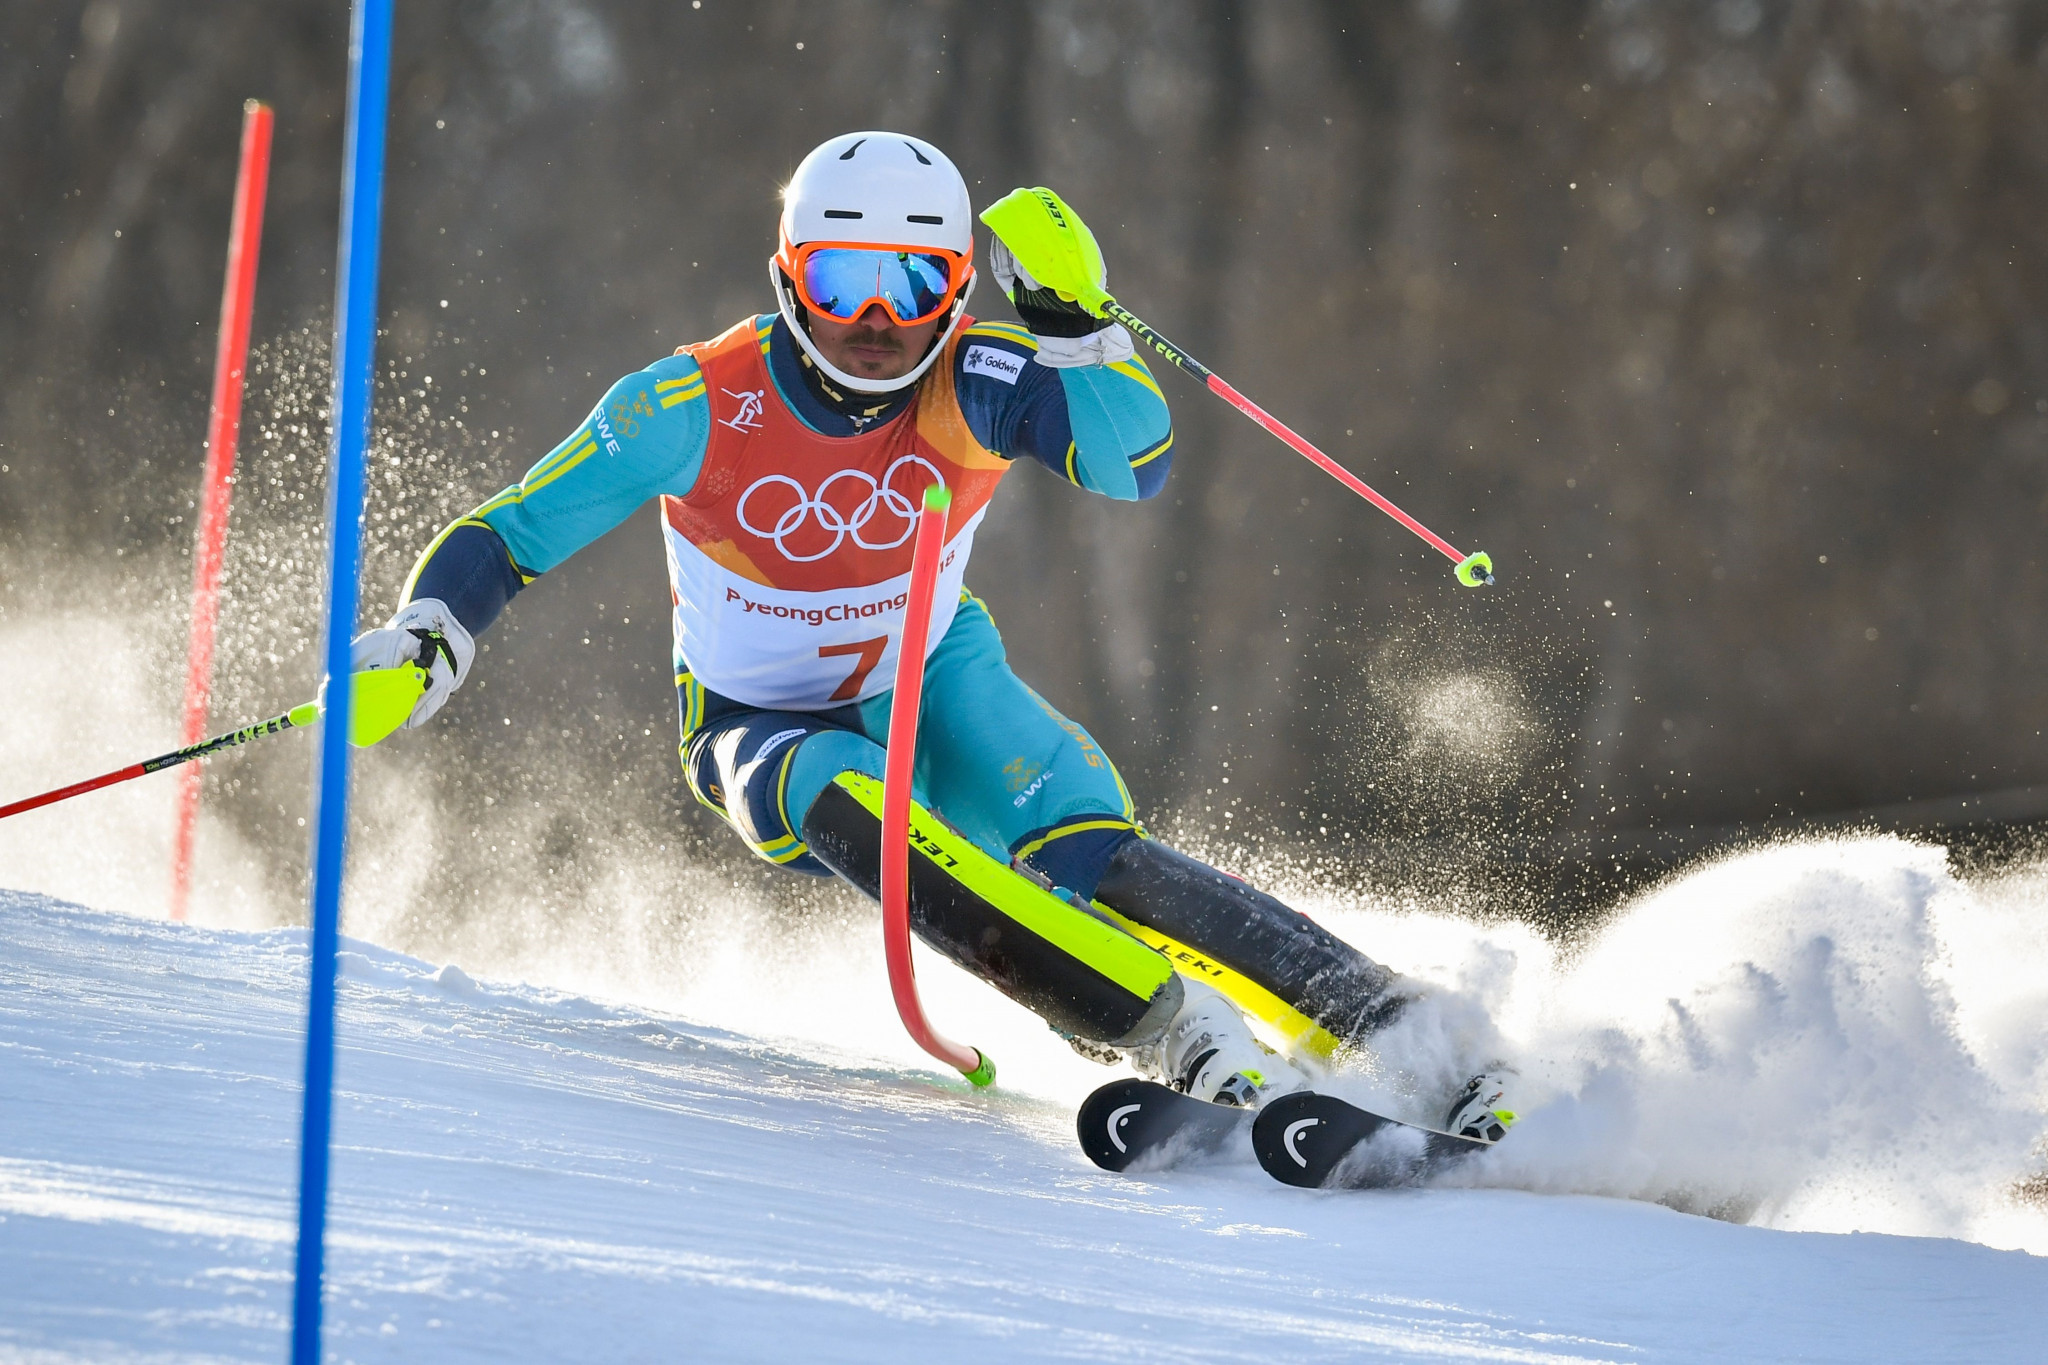 Sweden’s André Myhrer was a surprise winner of the men’s slalom event ©Getty Images